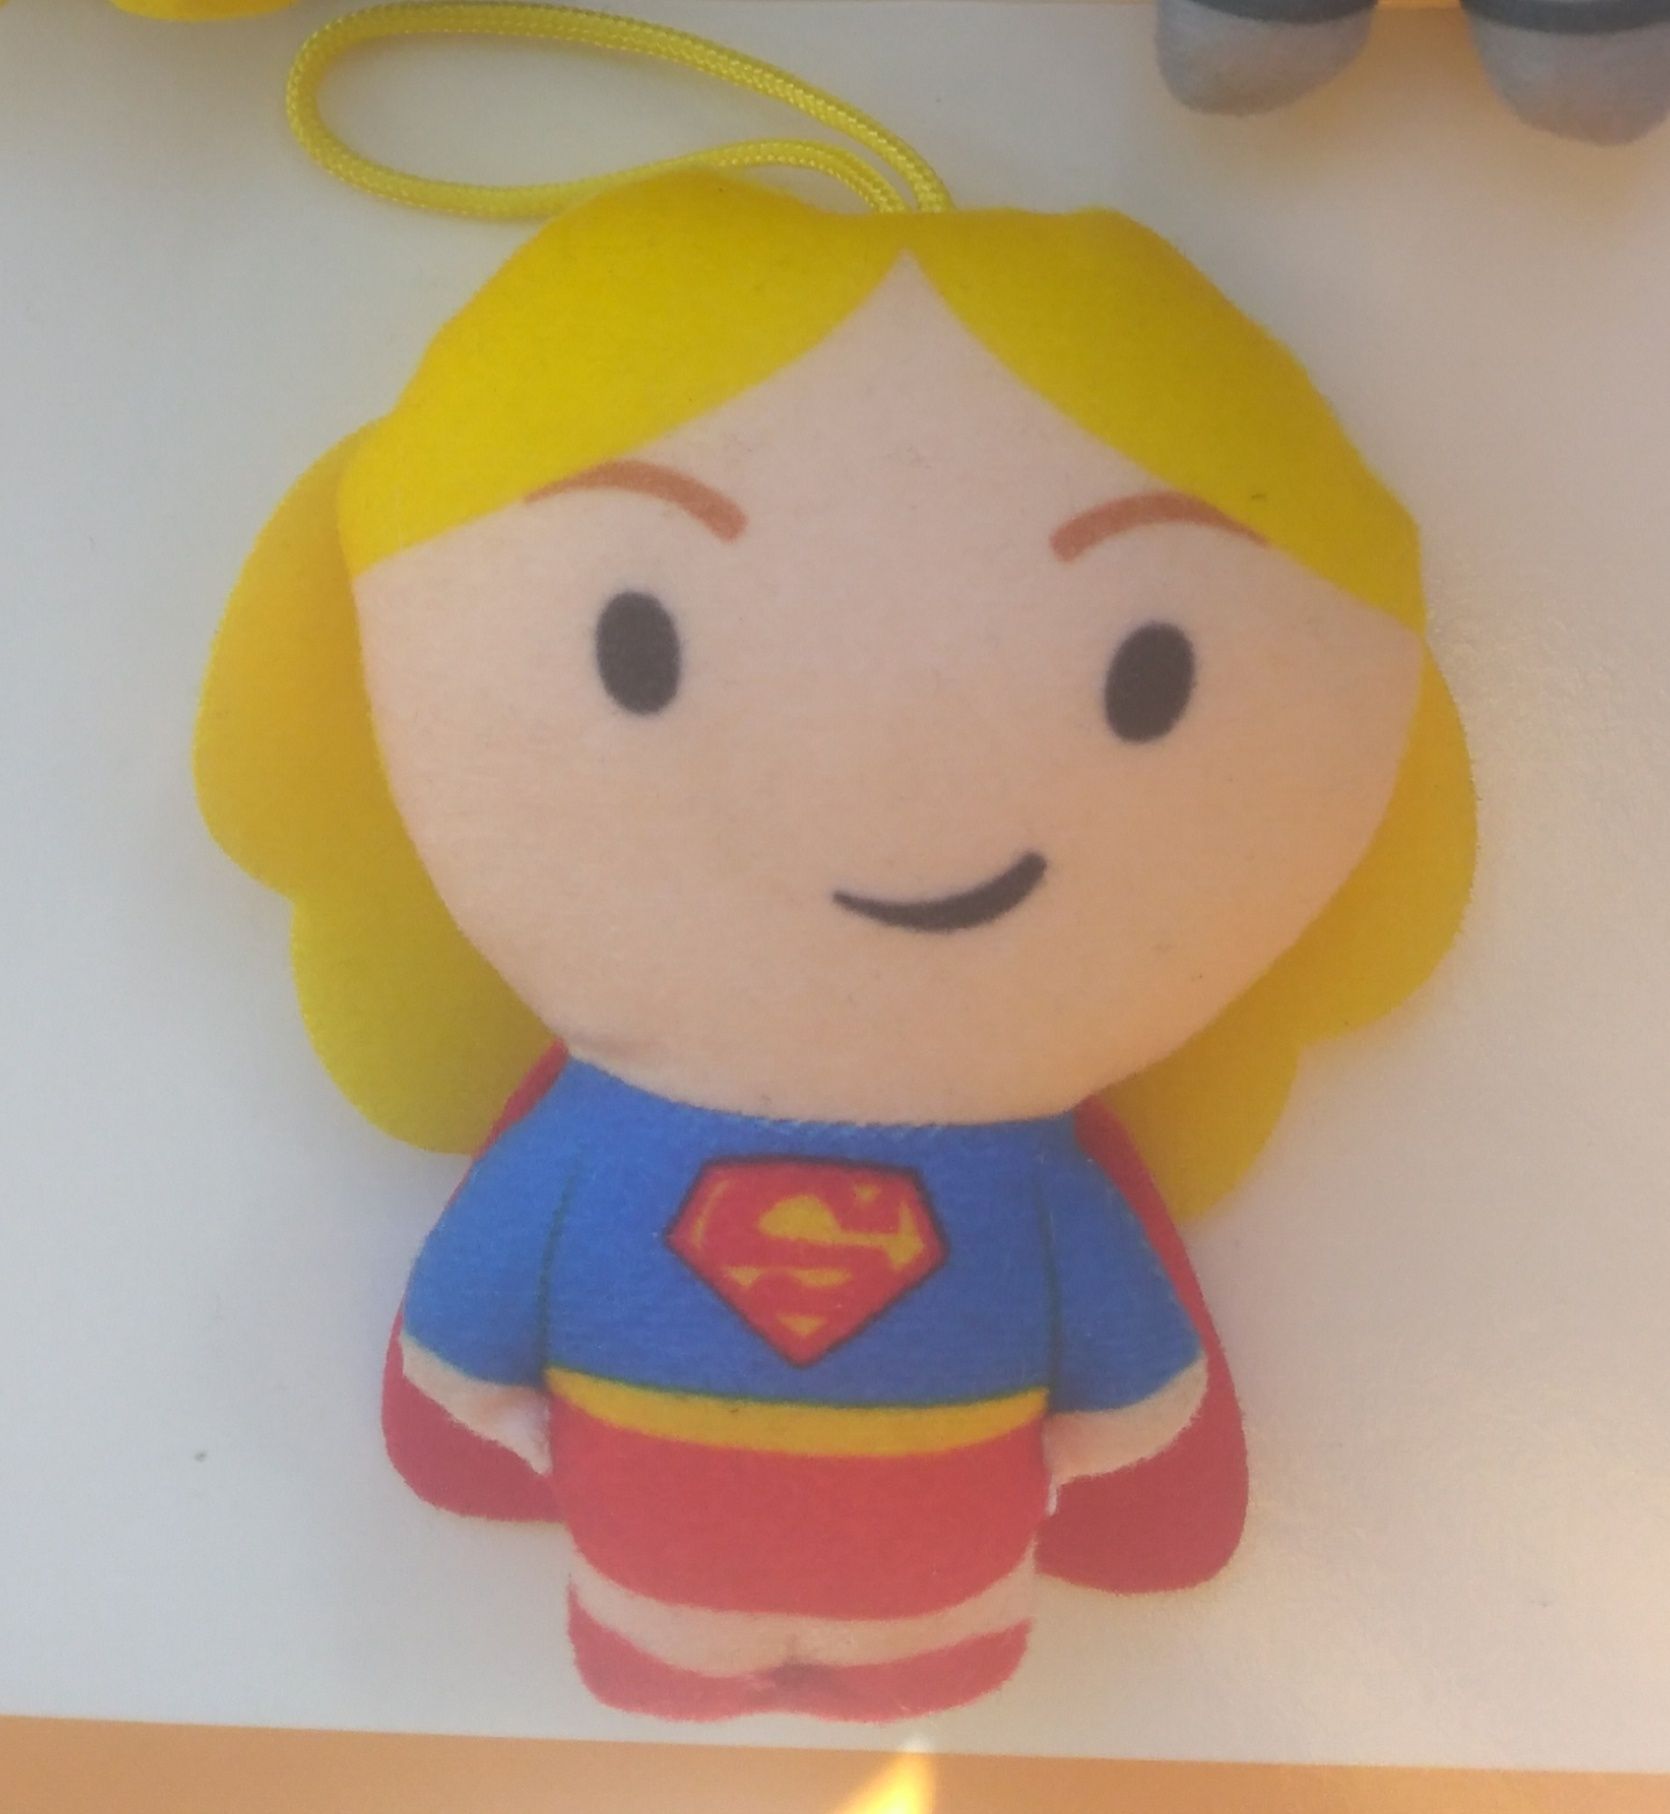 Zabawka/zawieszka, Supergirl, McDonald's 2021r.